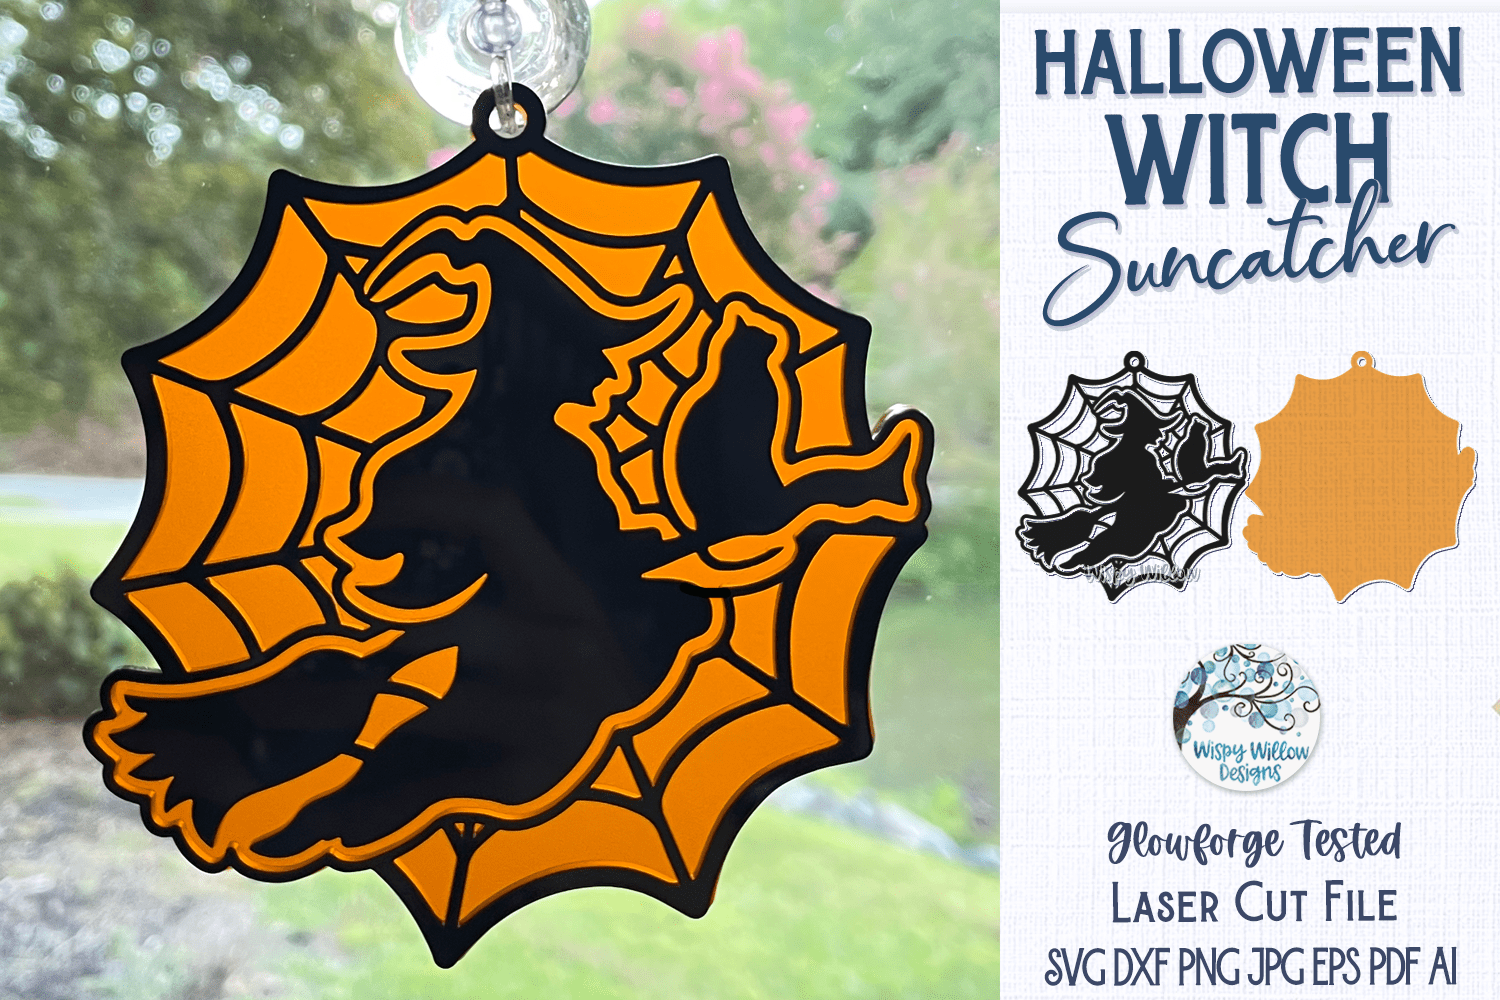 Halloween Witch Suncatcher for Glowforge Laser Cutter Wispy Willow Designs Company